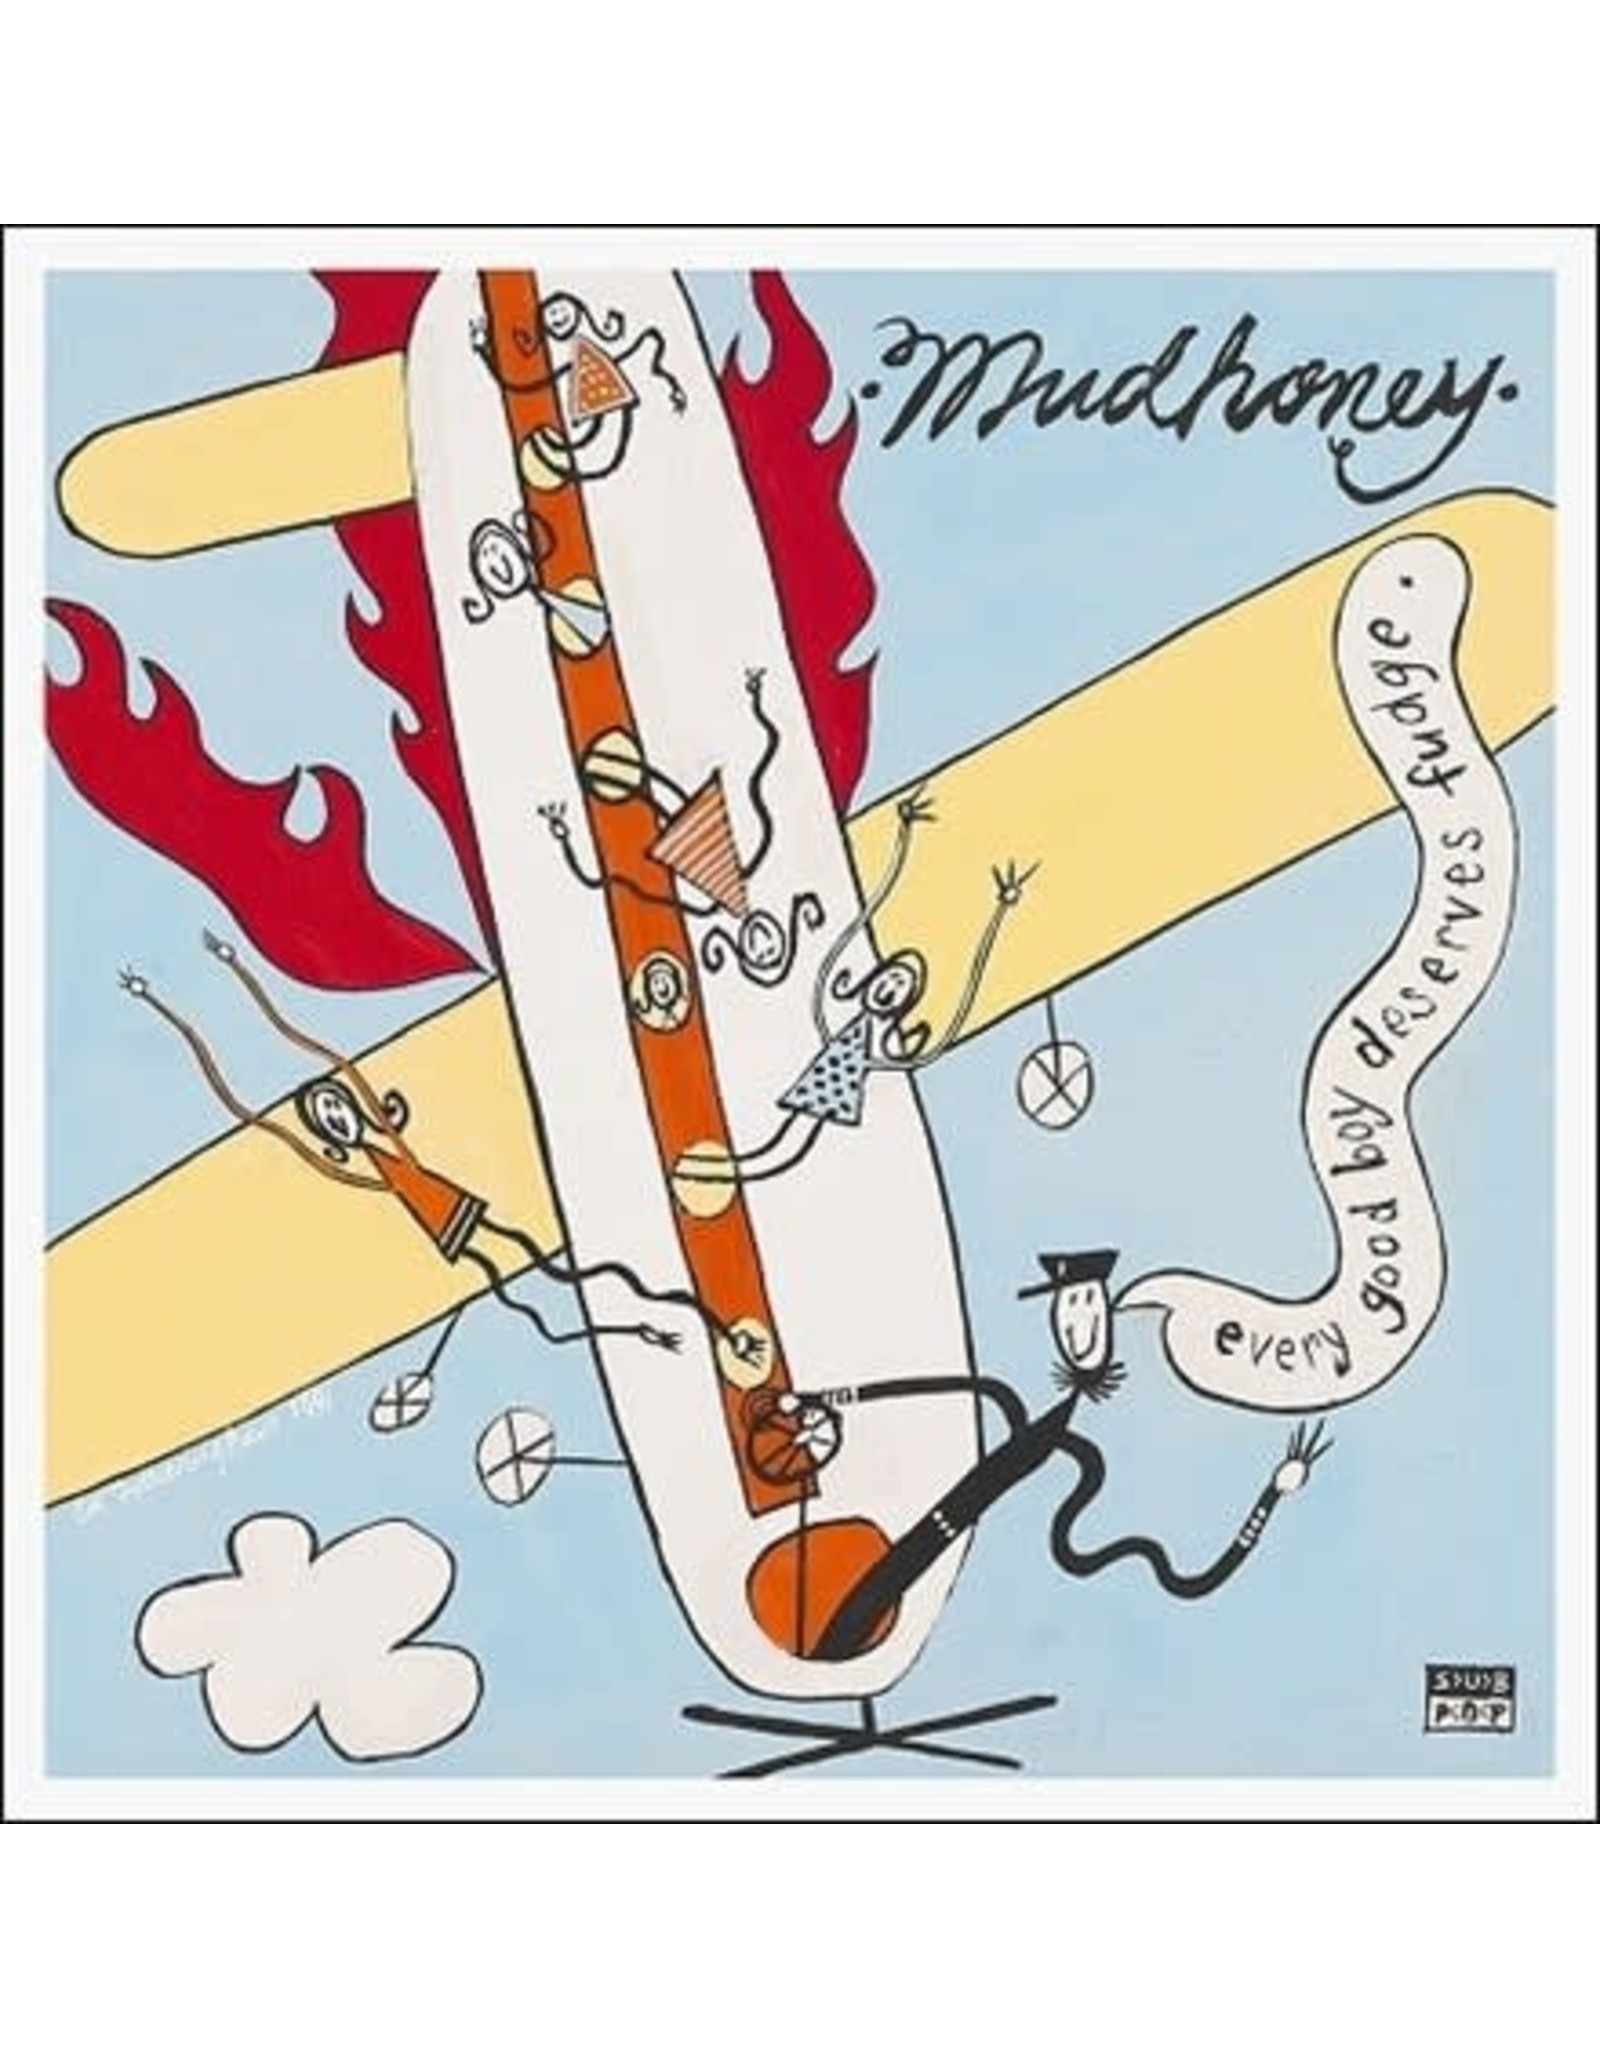 Sub Pop Mudhoney: Every Good Boy Deserves Fudge (2LP deluxe edition) LP